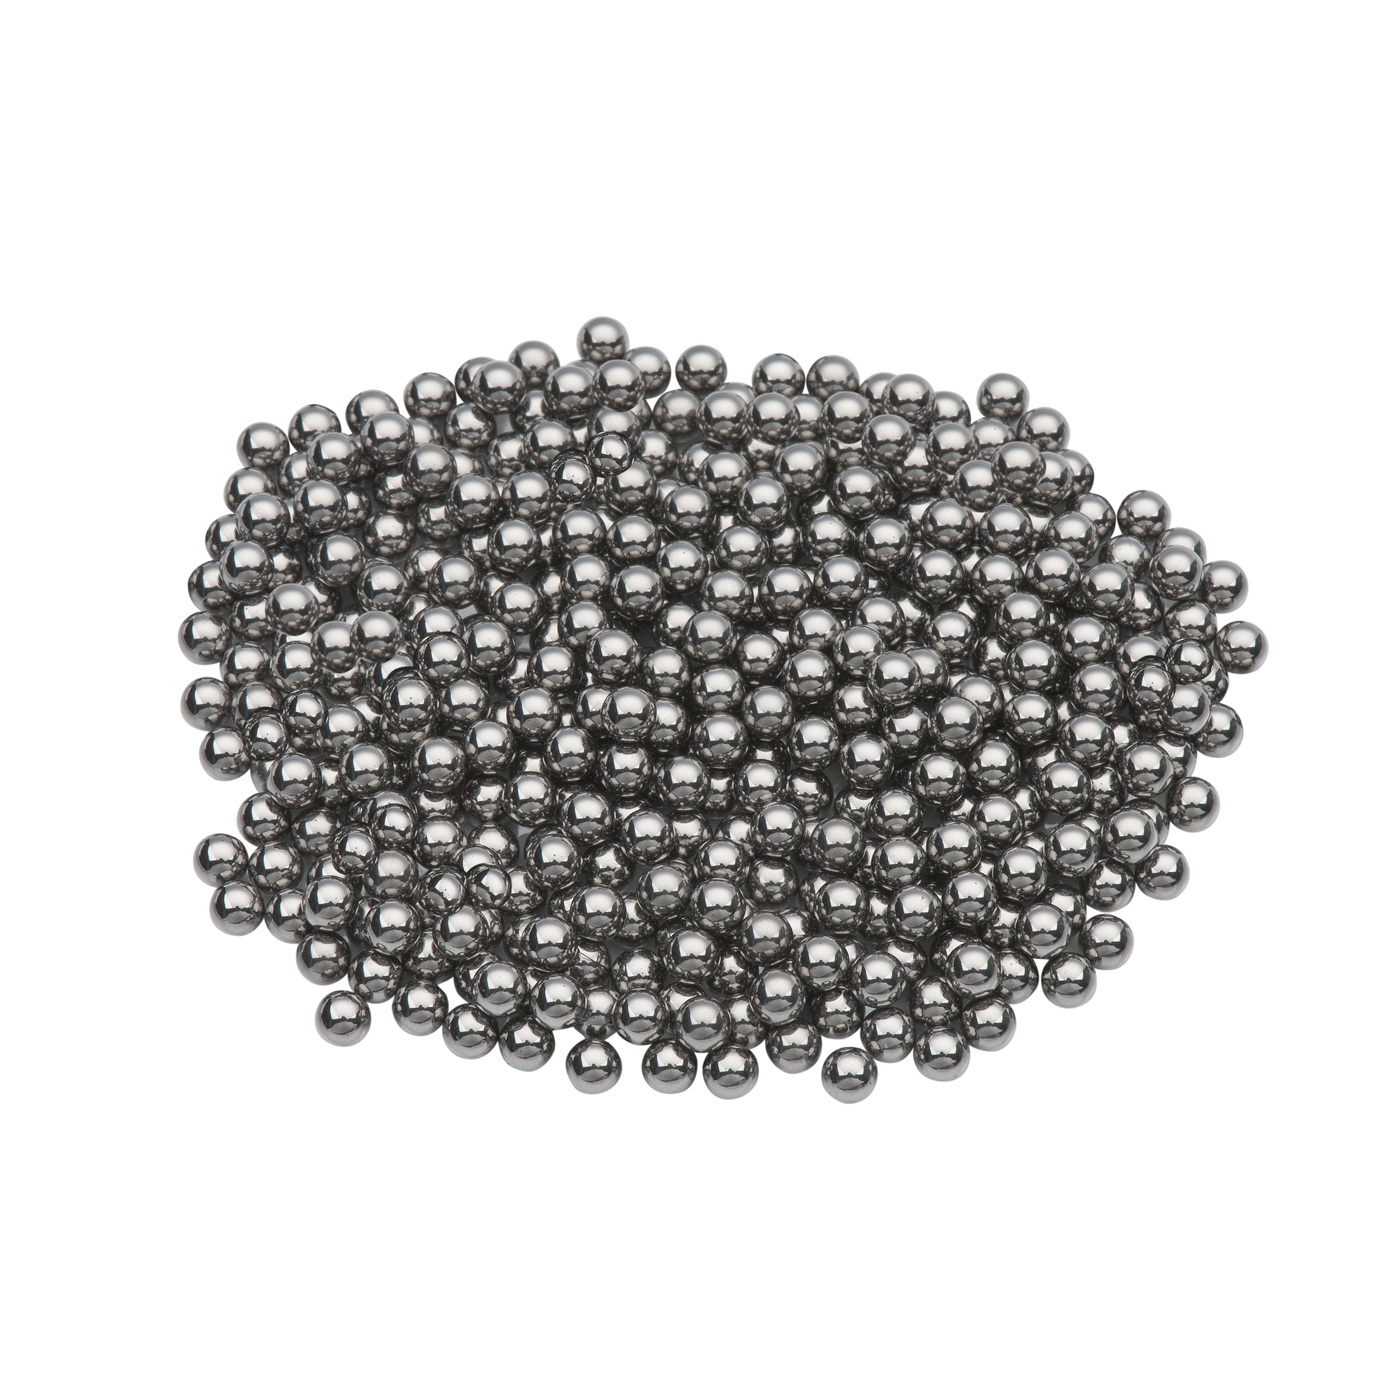 Stainless Steel Polishing Bodies, Balls, ø 3.1 mm - 1000 g